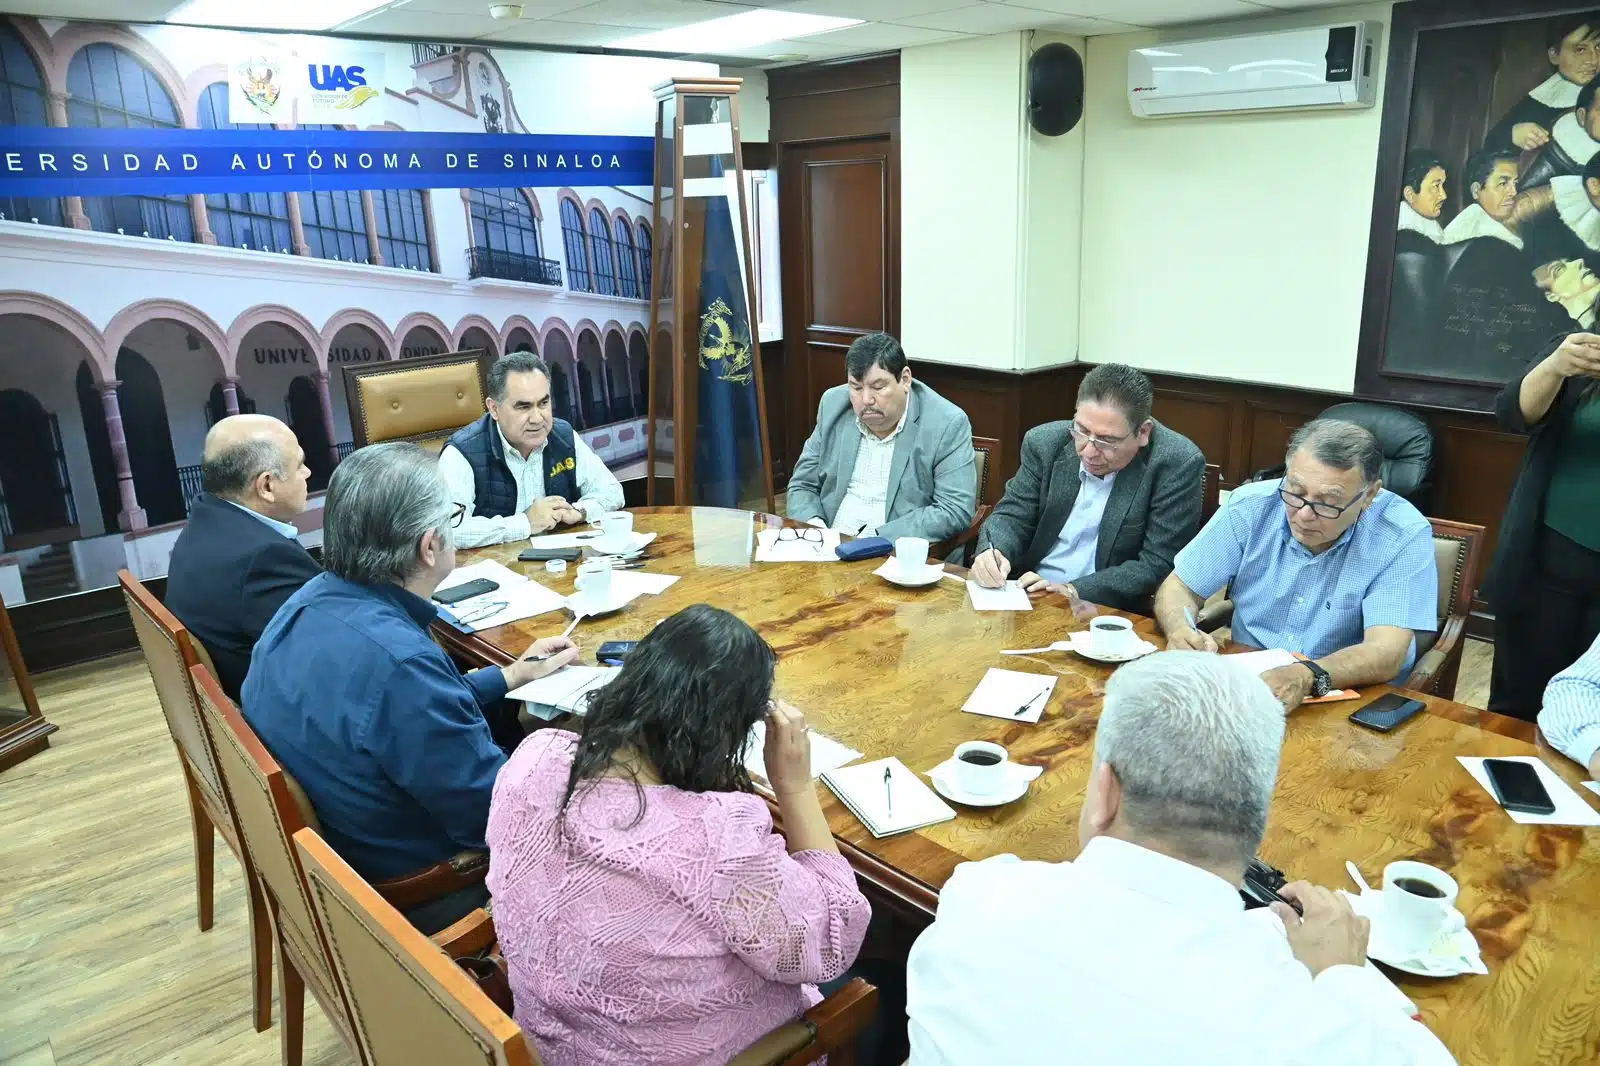 UAS Reunión Reforma Académico-Administrativa